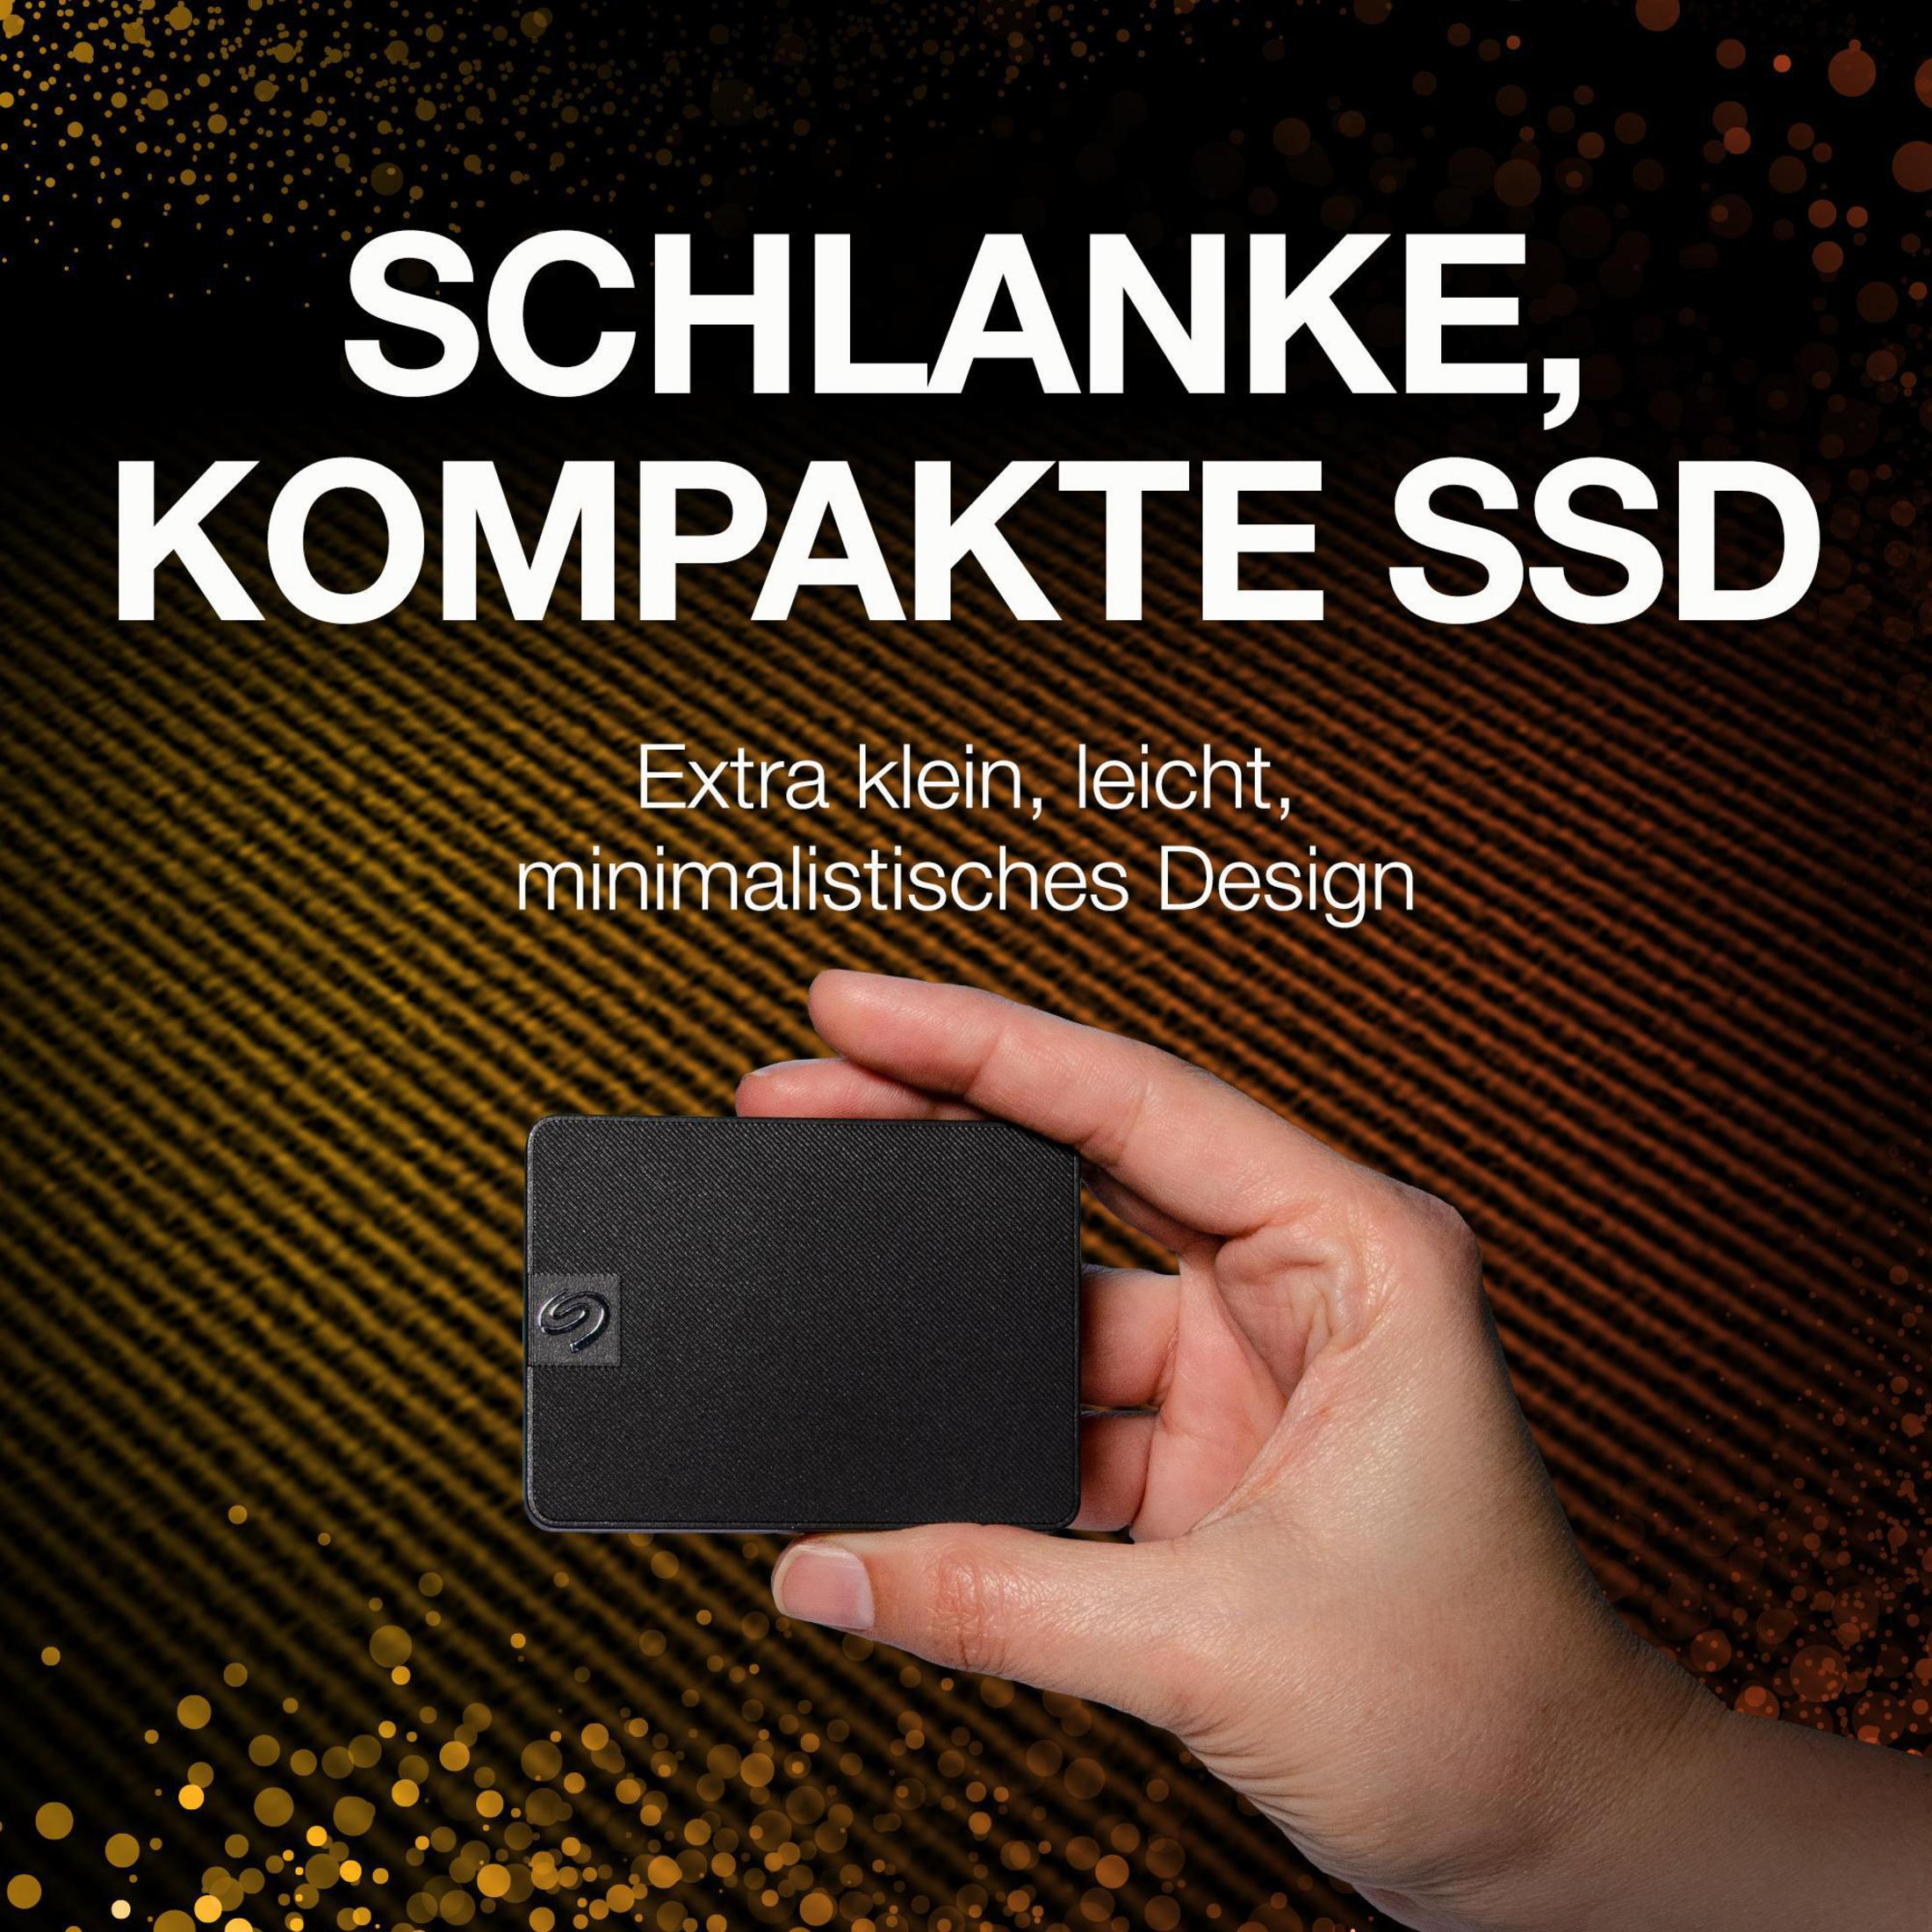 SEAGATE STJD500400 EXPANSION SSD 500GB SSD, BLACK, 500 Schwarz extern, GB